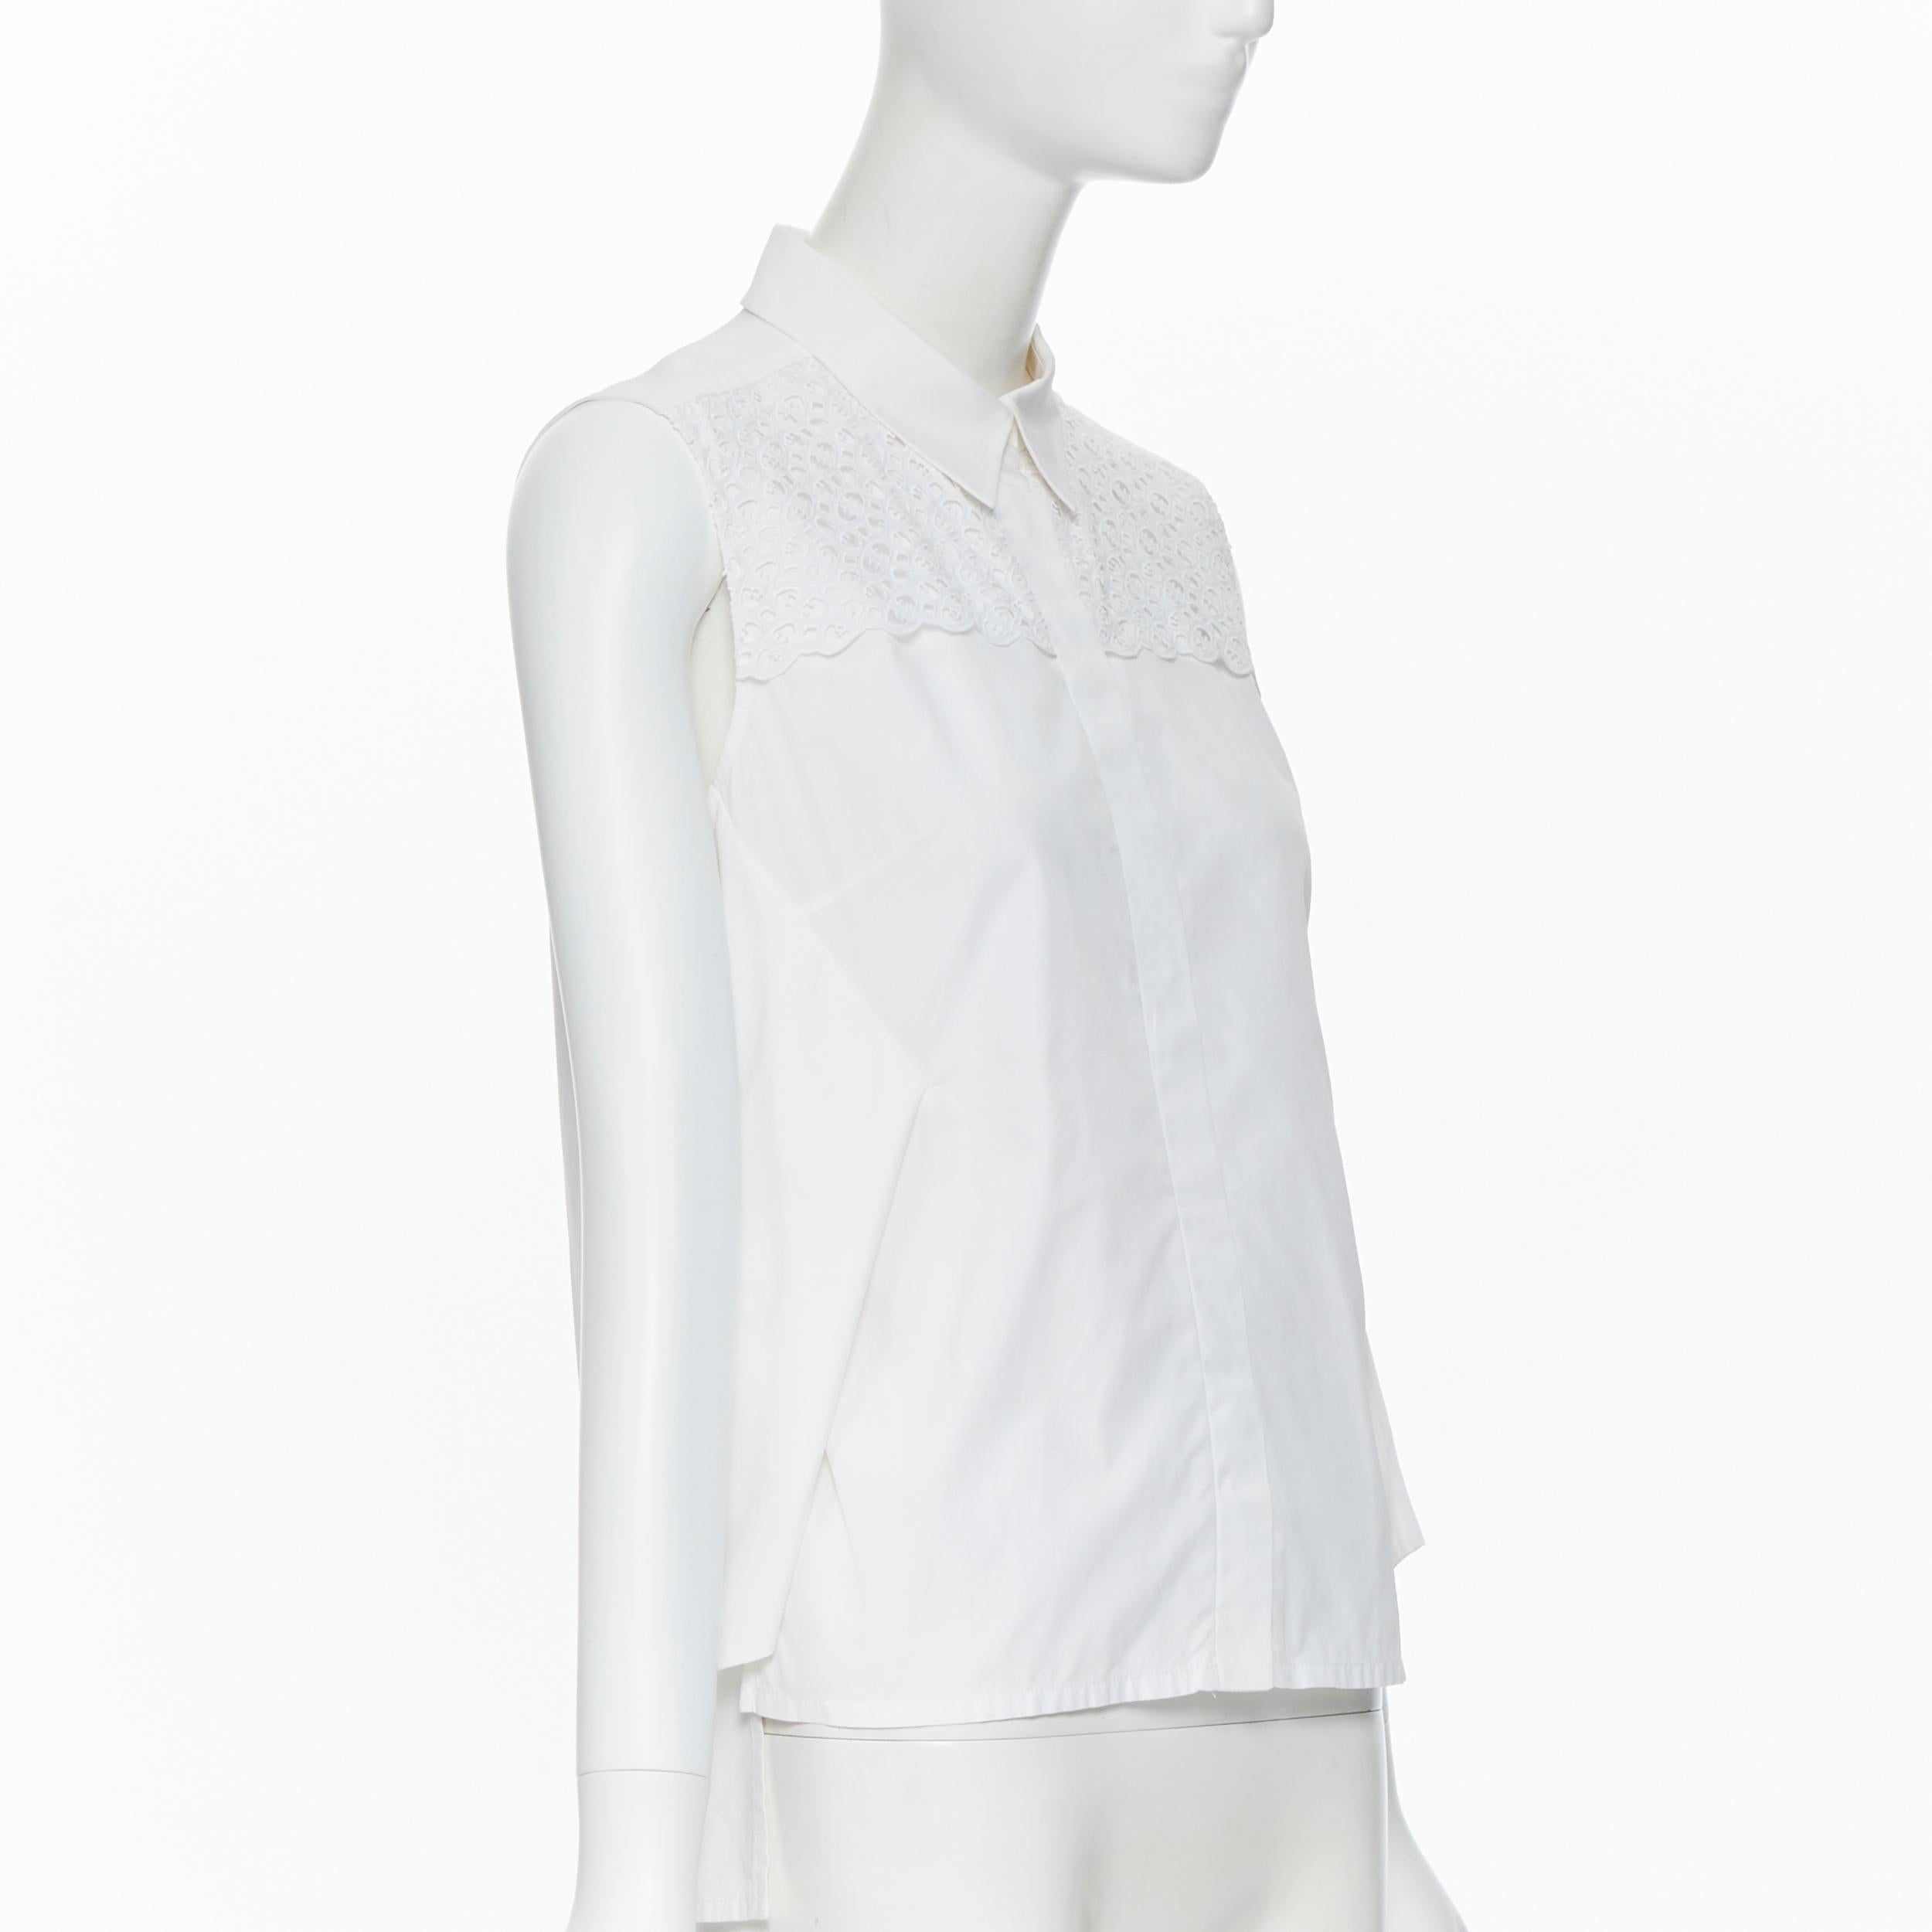 Gray PETER PILOTTO white cotton embroidery anglais paneled panel sleeveless shirt S